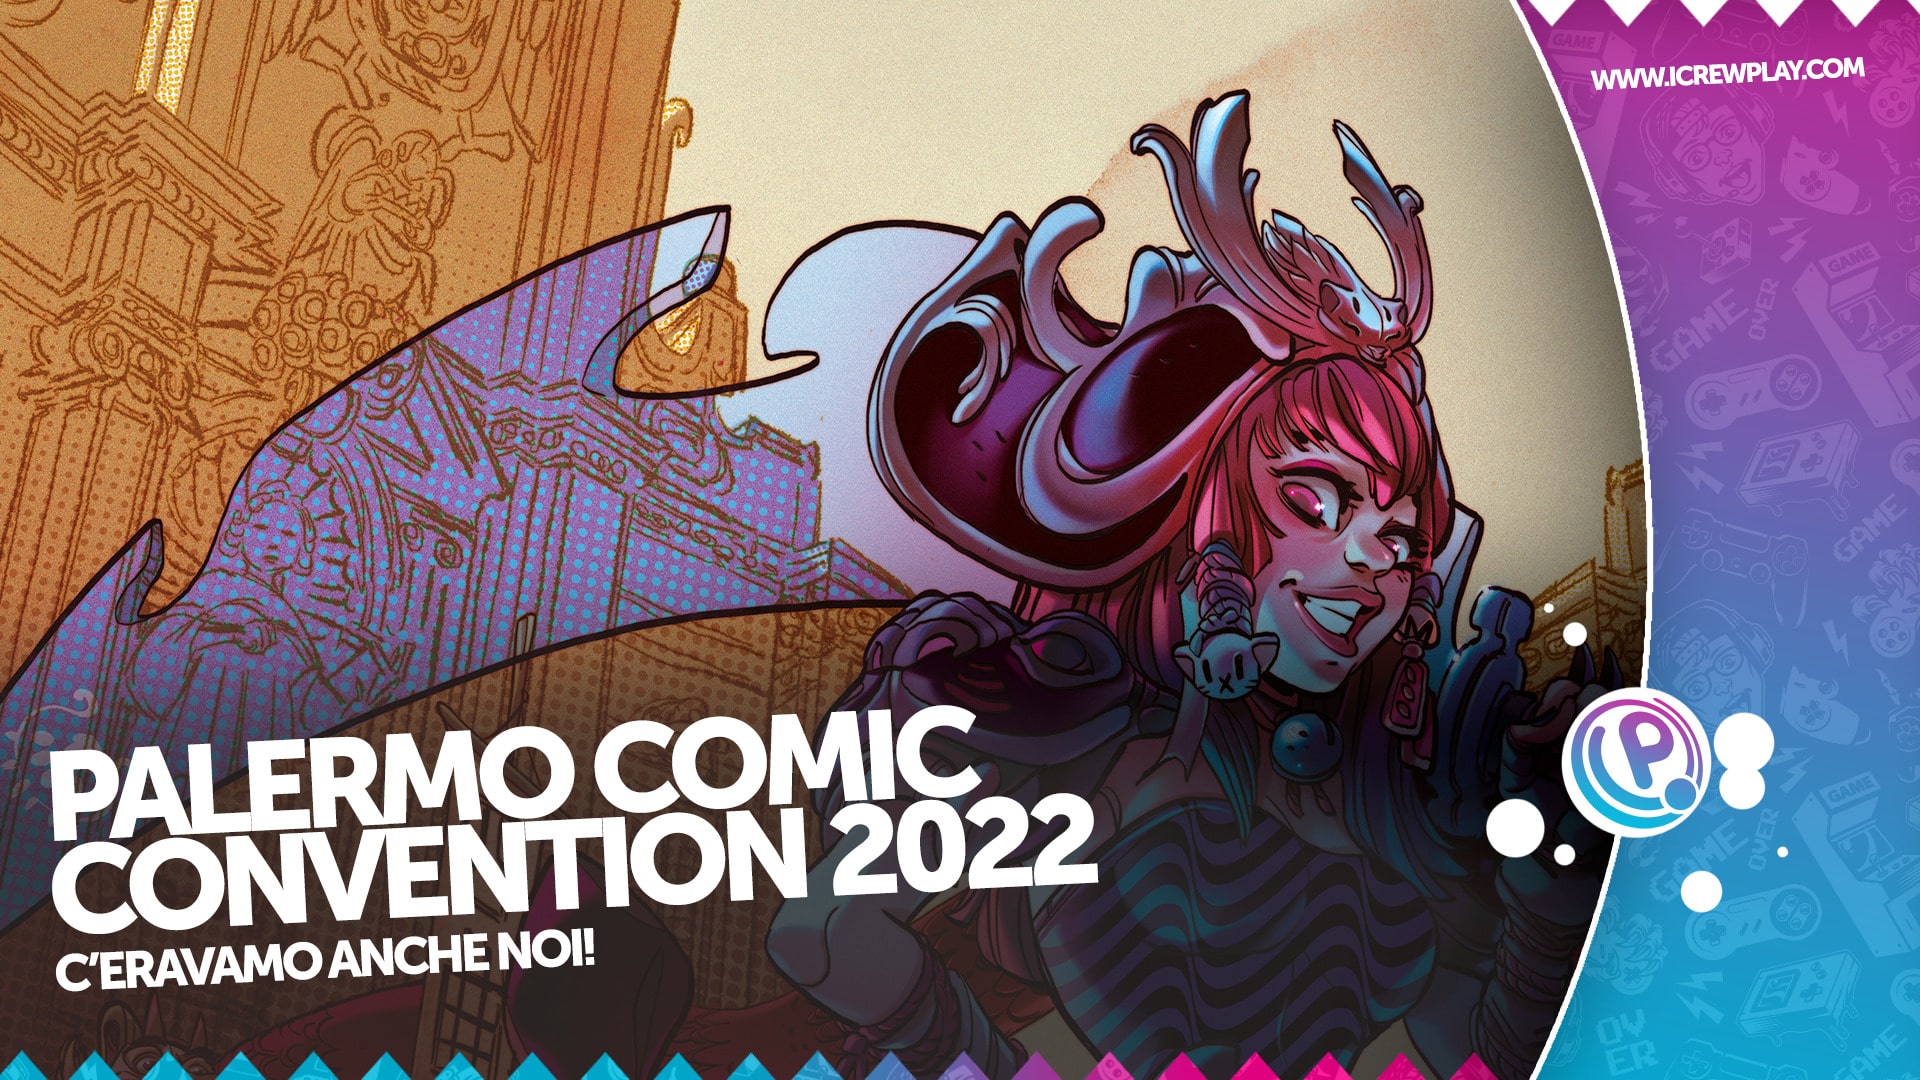 Palermo Comic Convention 2022 noi c'eravamo 2